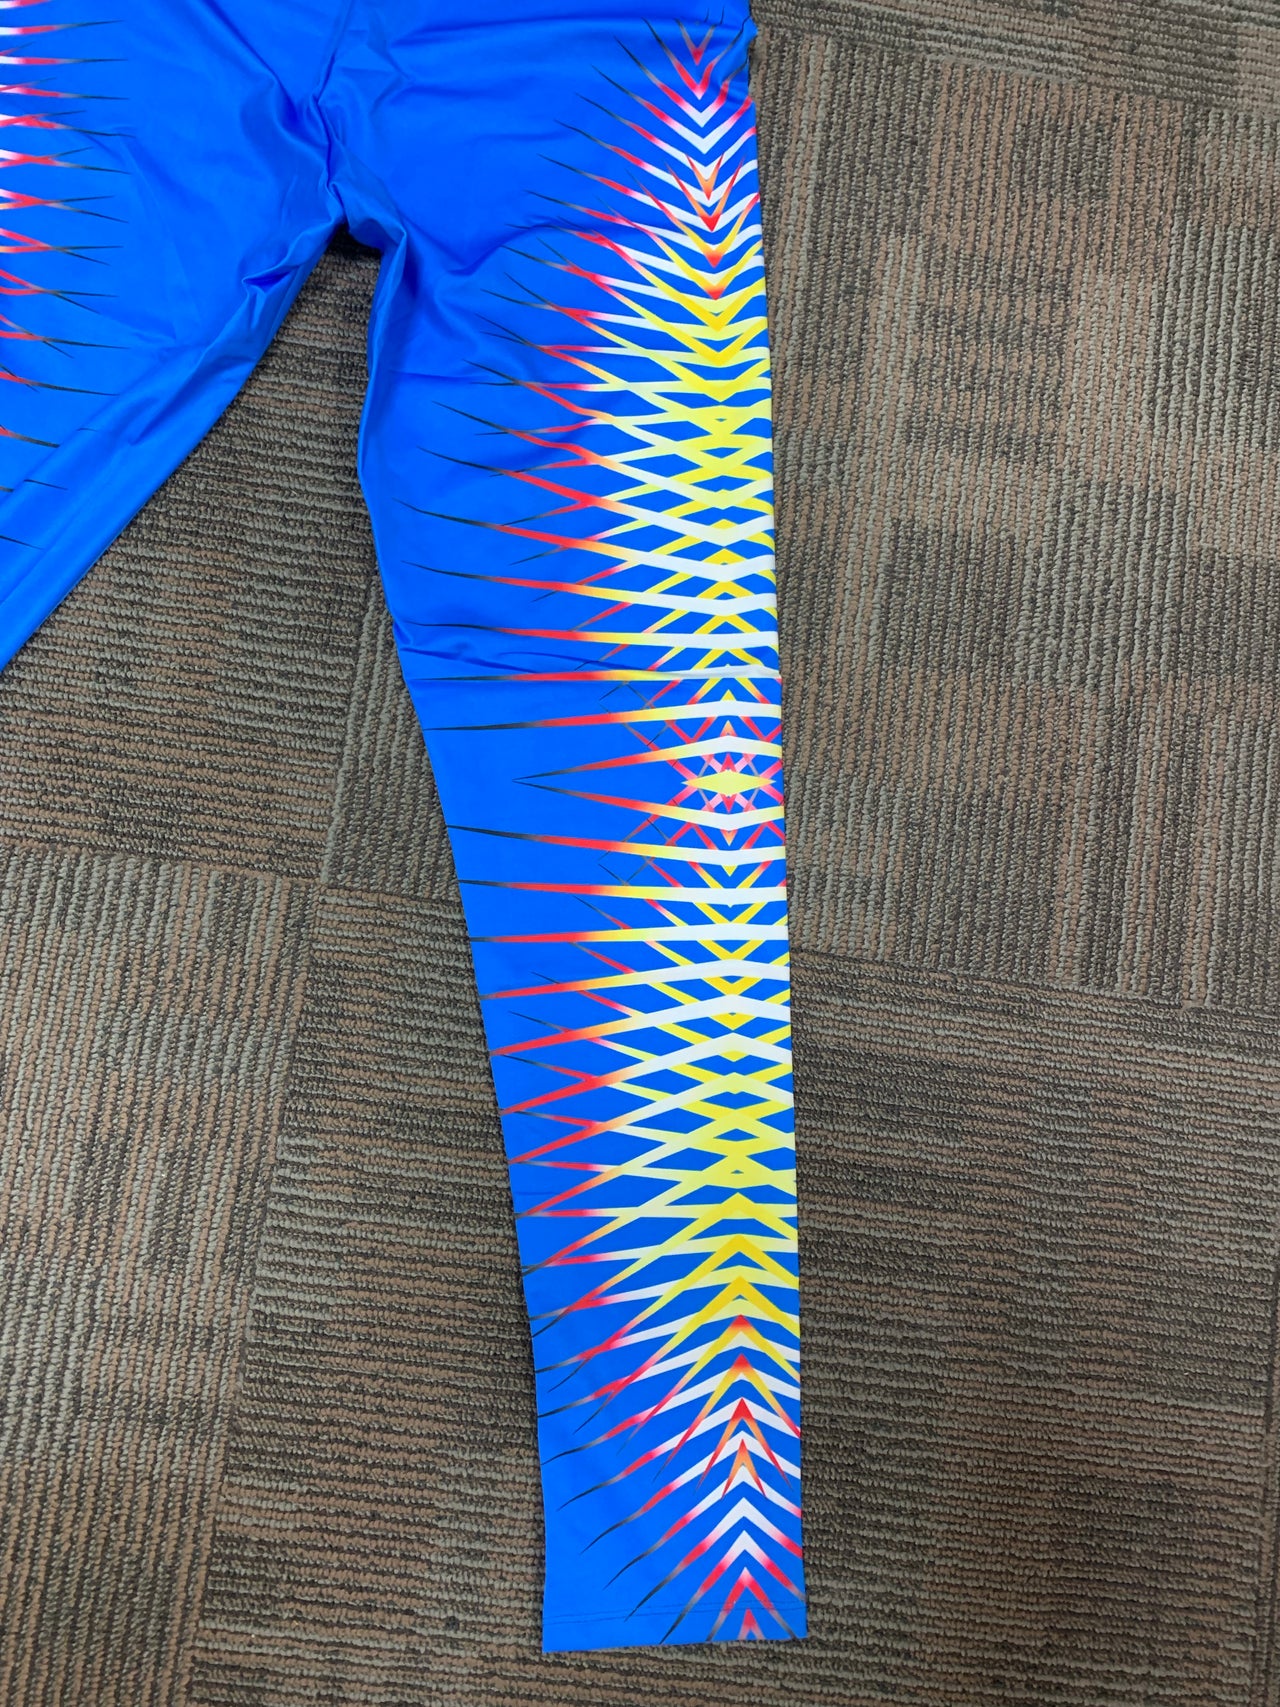 Pattern of Blue Crazy Yoga Pants